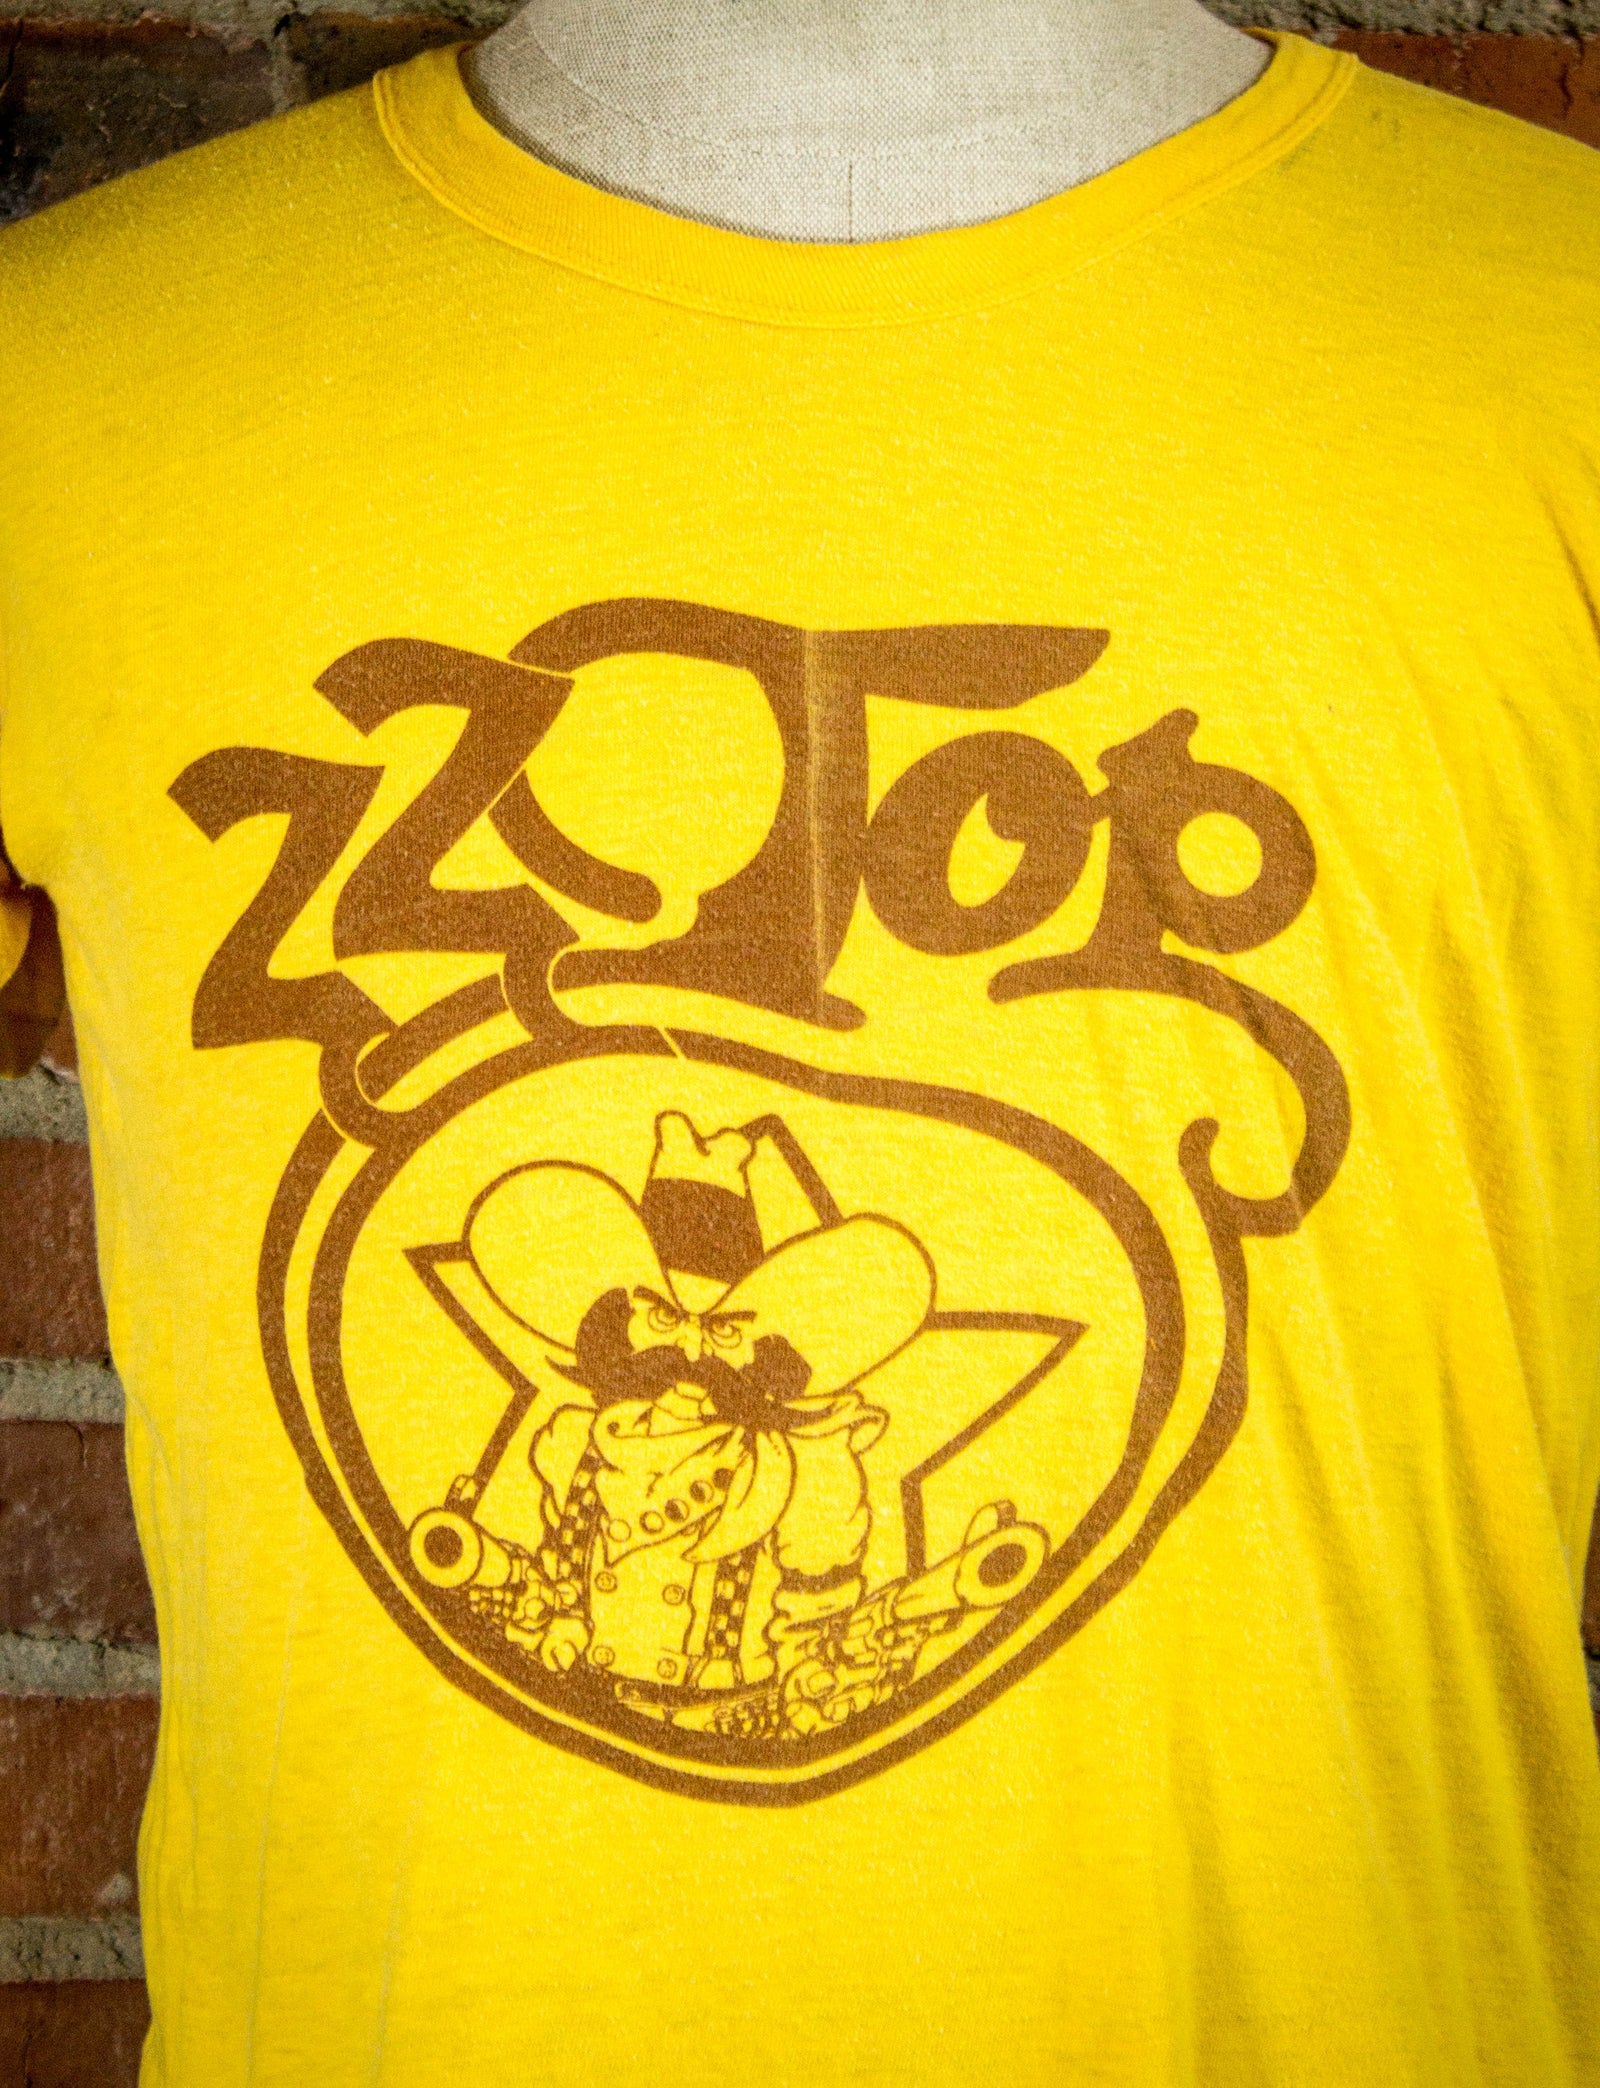 Vintage ZZ Top 1974 Touring Yellow Concert T Shirt Medium